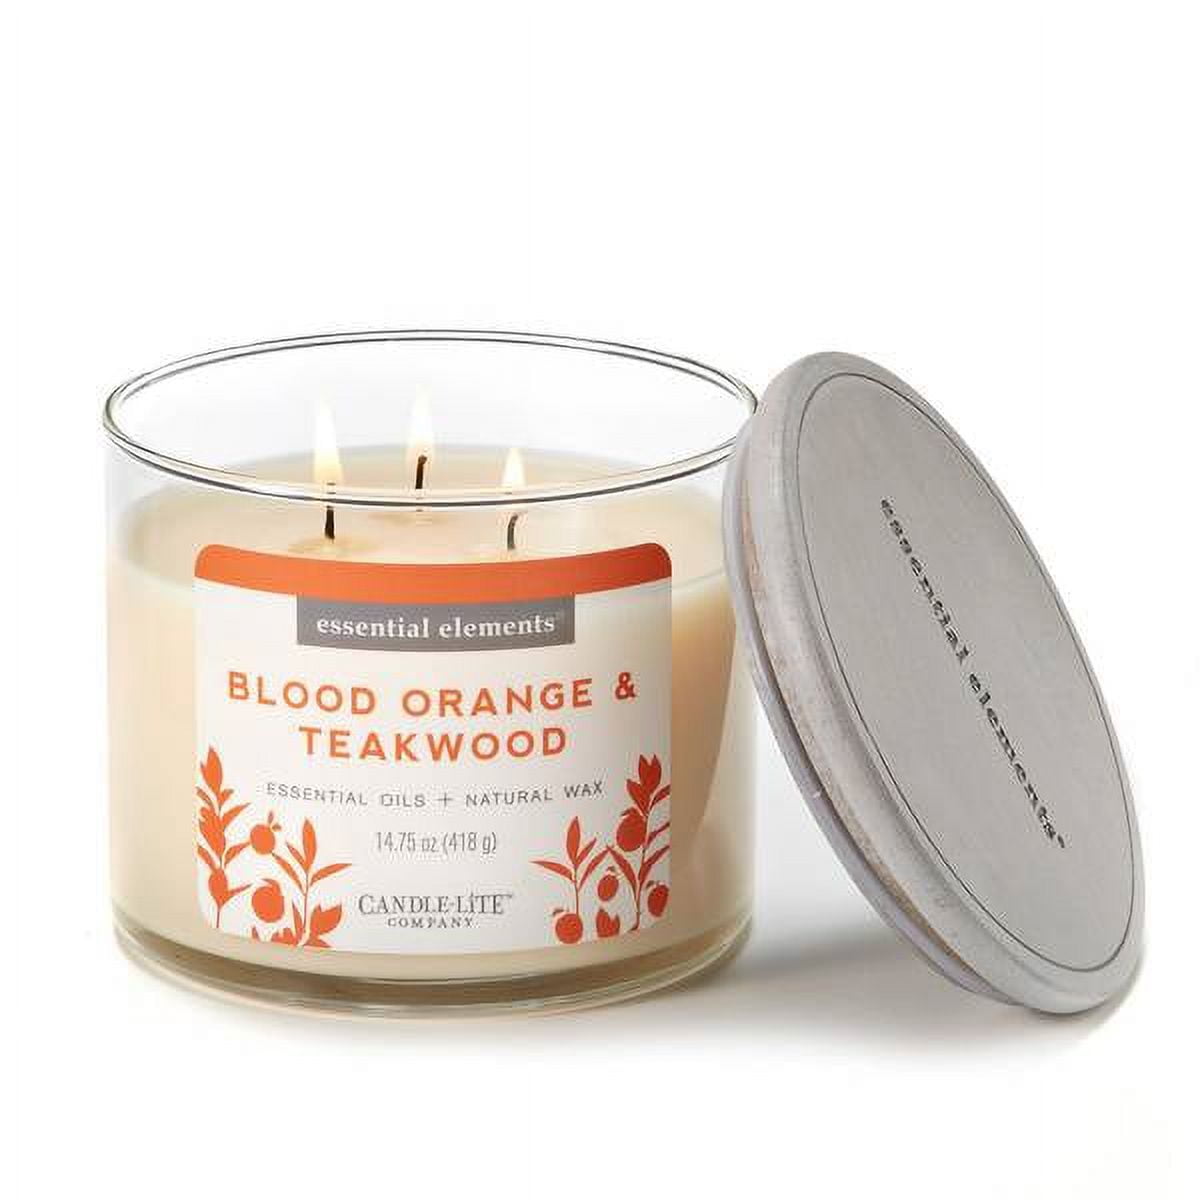 Essential Elements Candle, Blood Orange + Teakwood - 1 candle, 14.75 oz